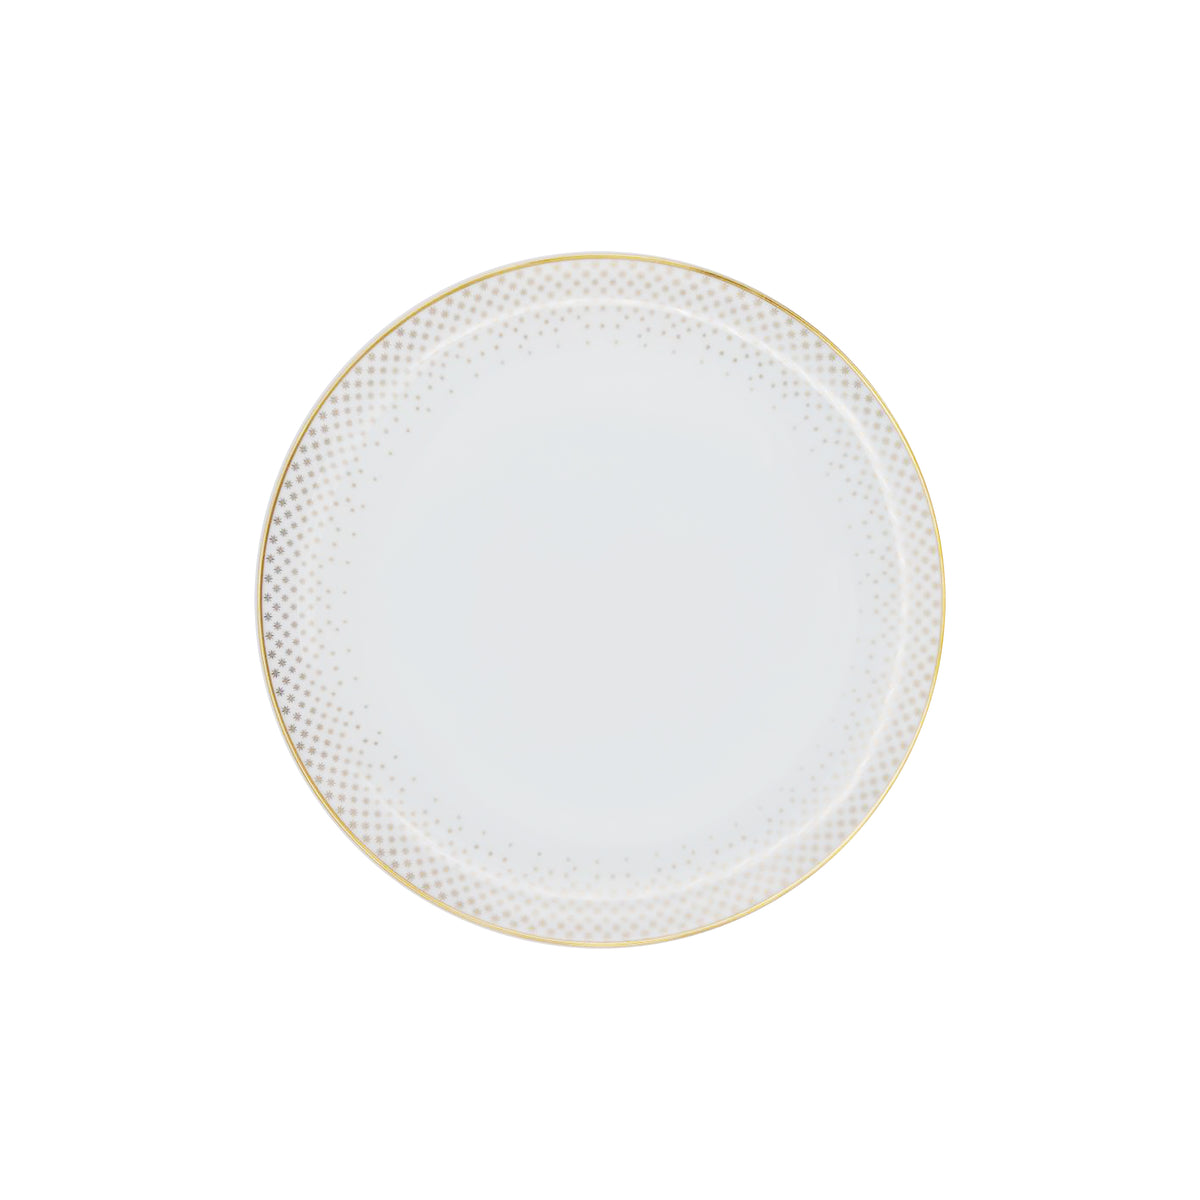 Rosace - Flat round dish, medium